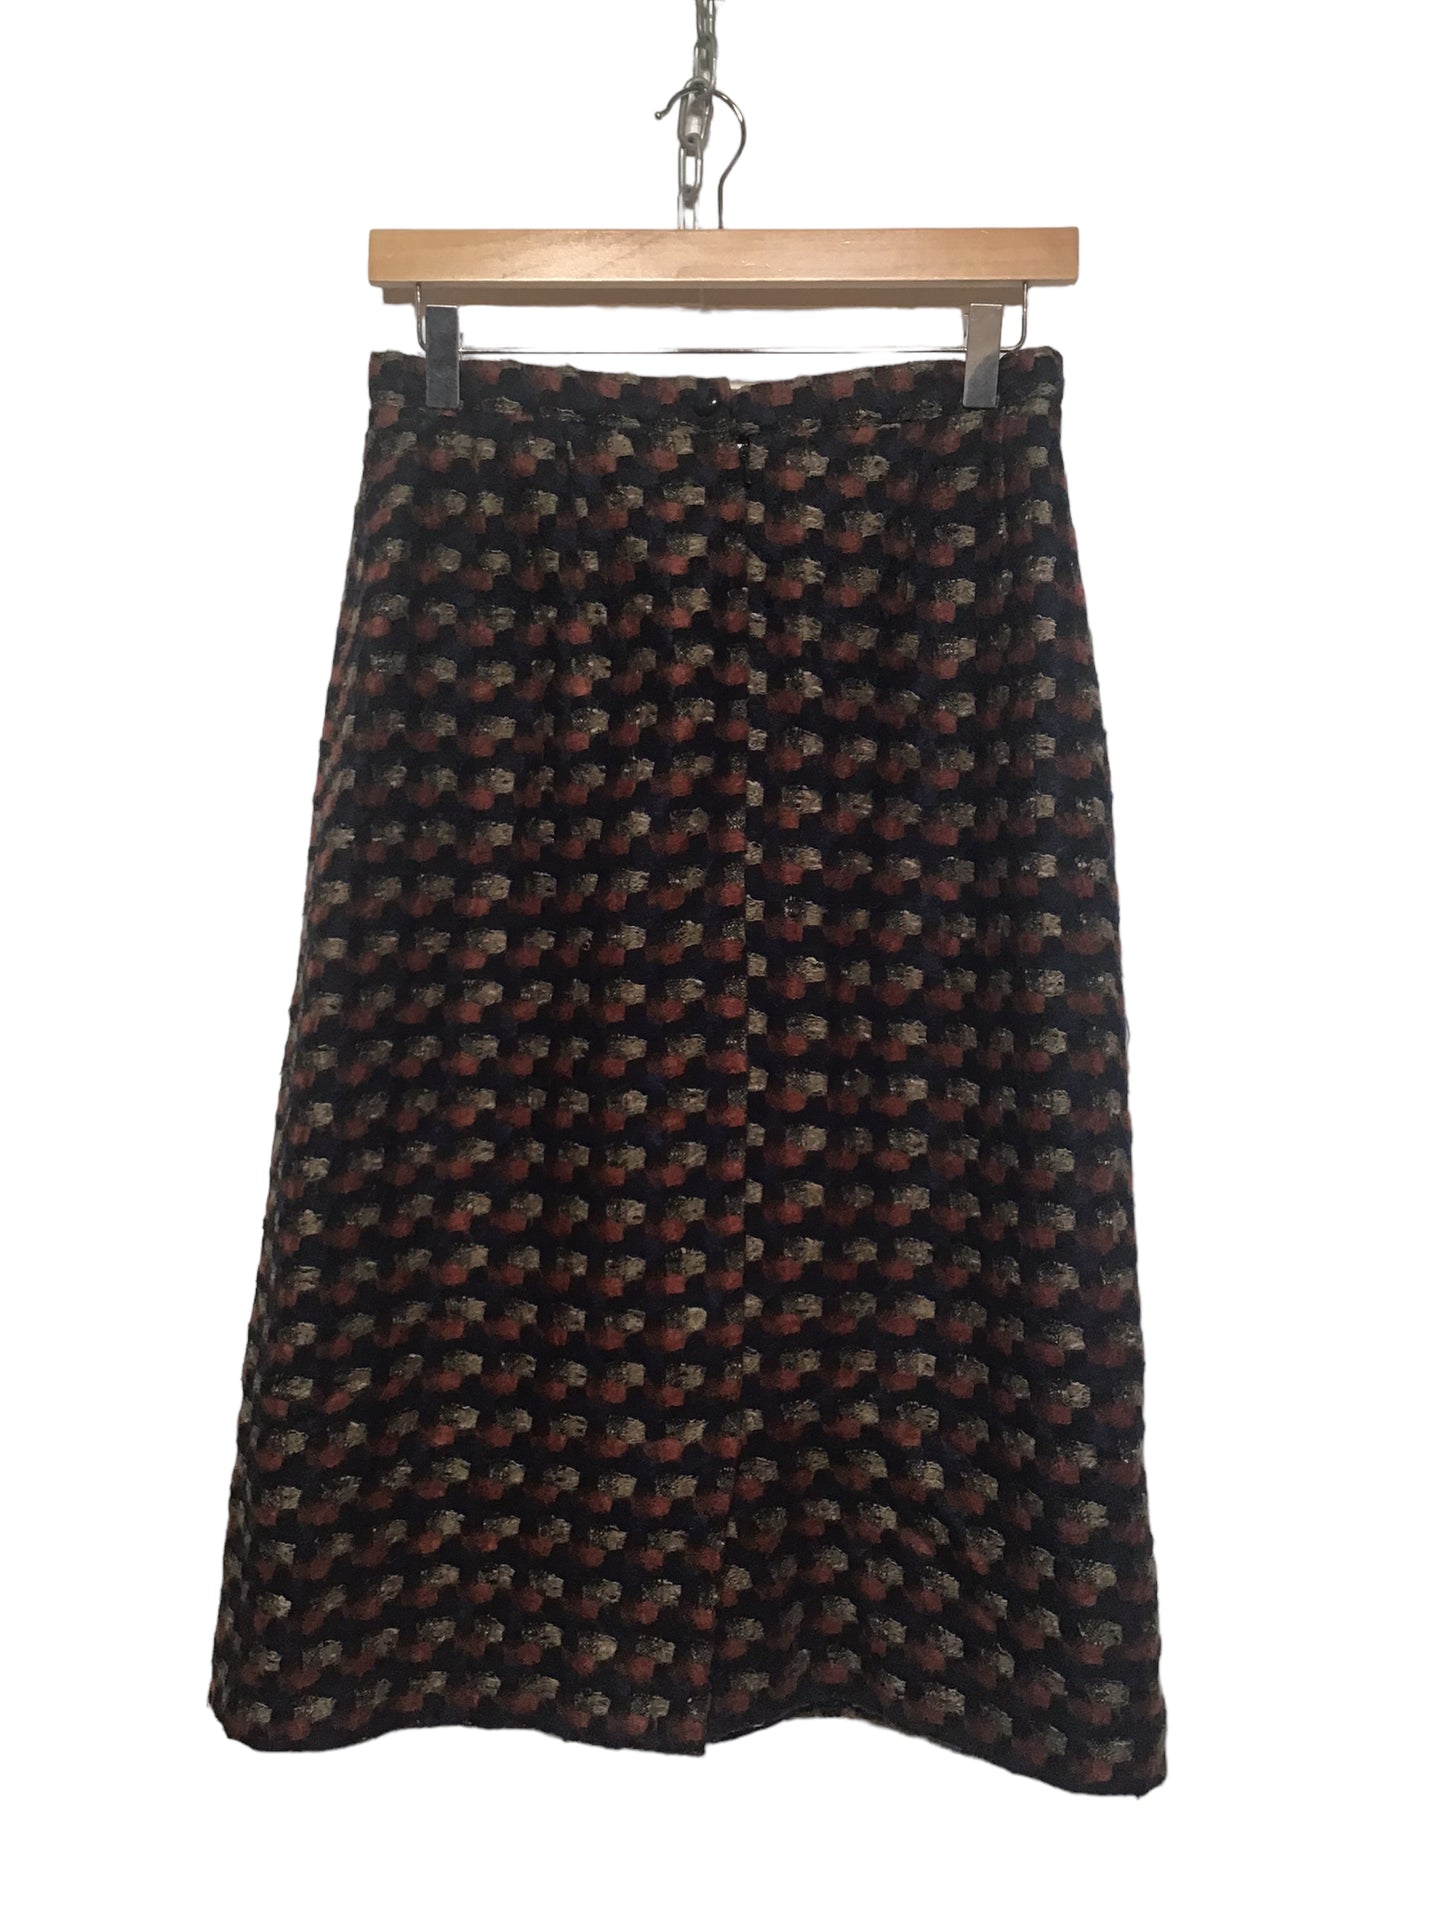 Windsmoor Blazer and Skirt Set (Size L)